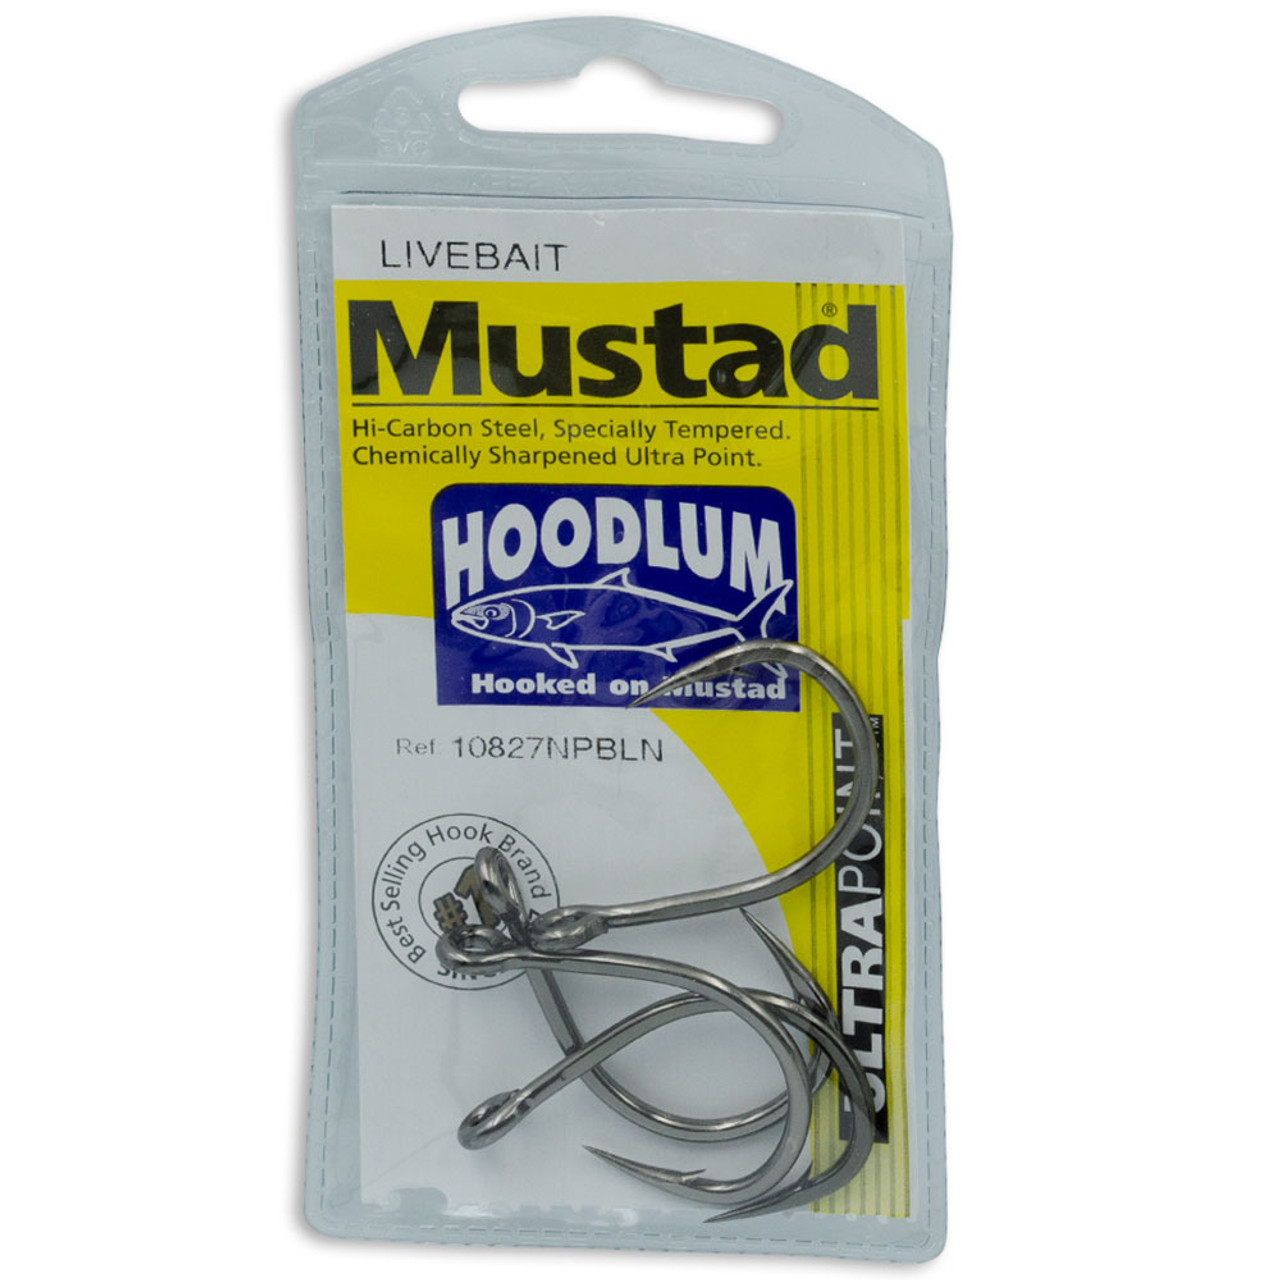 Mustad - Hoodlum 10827NPBLN, Fishing Hook